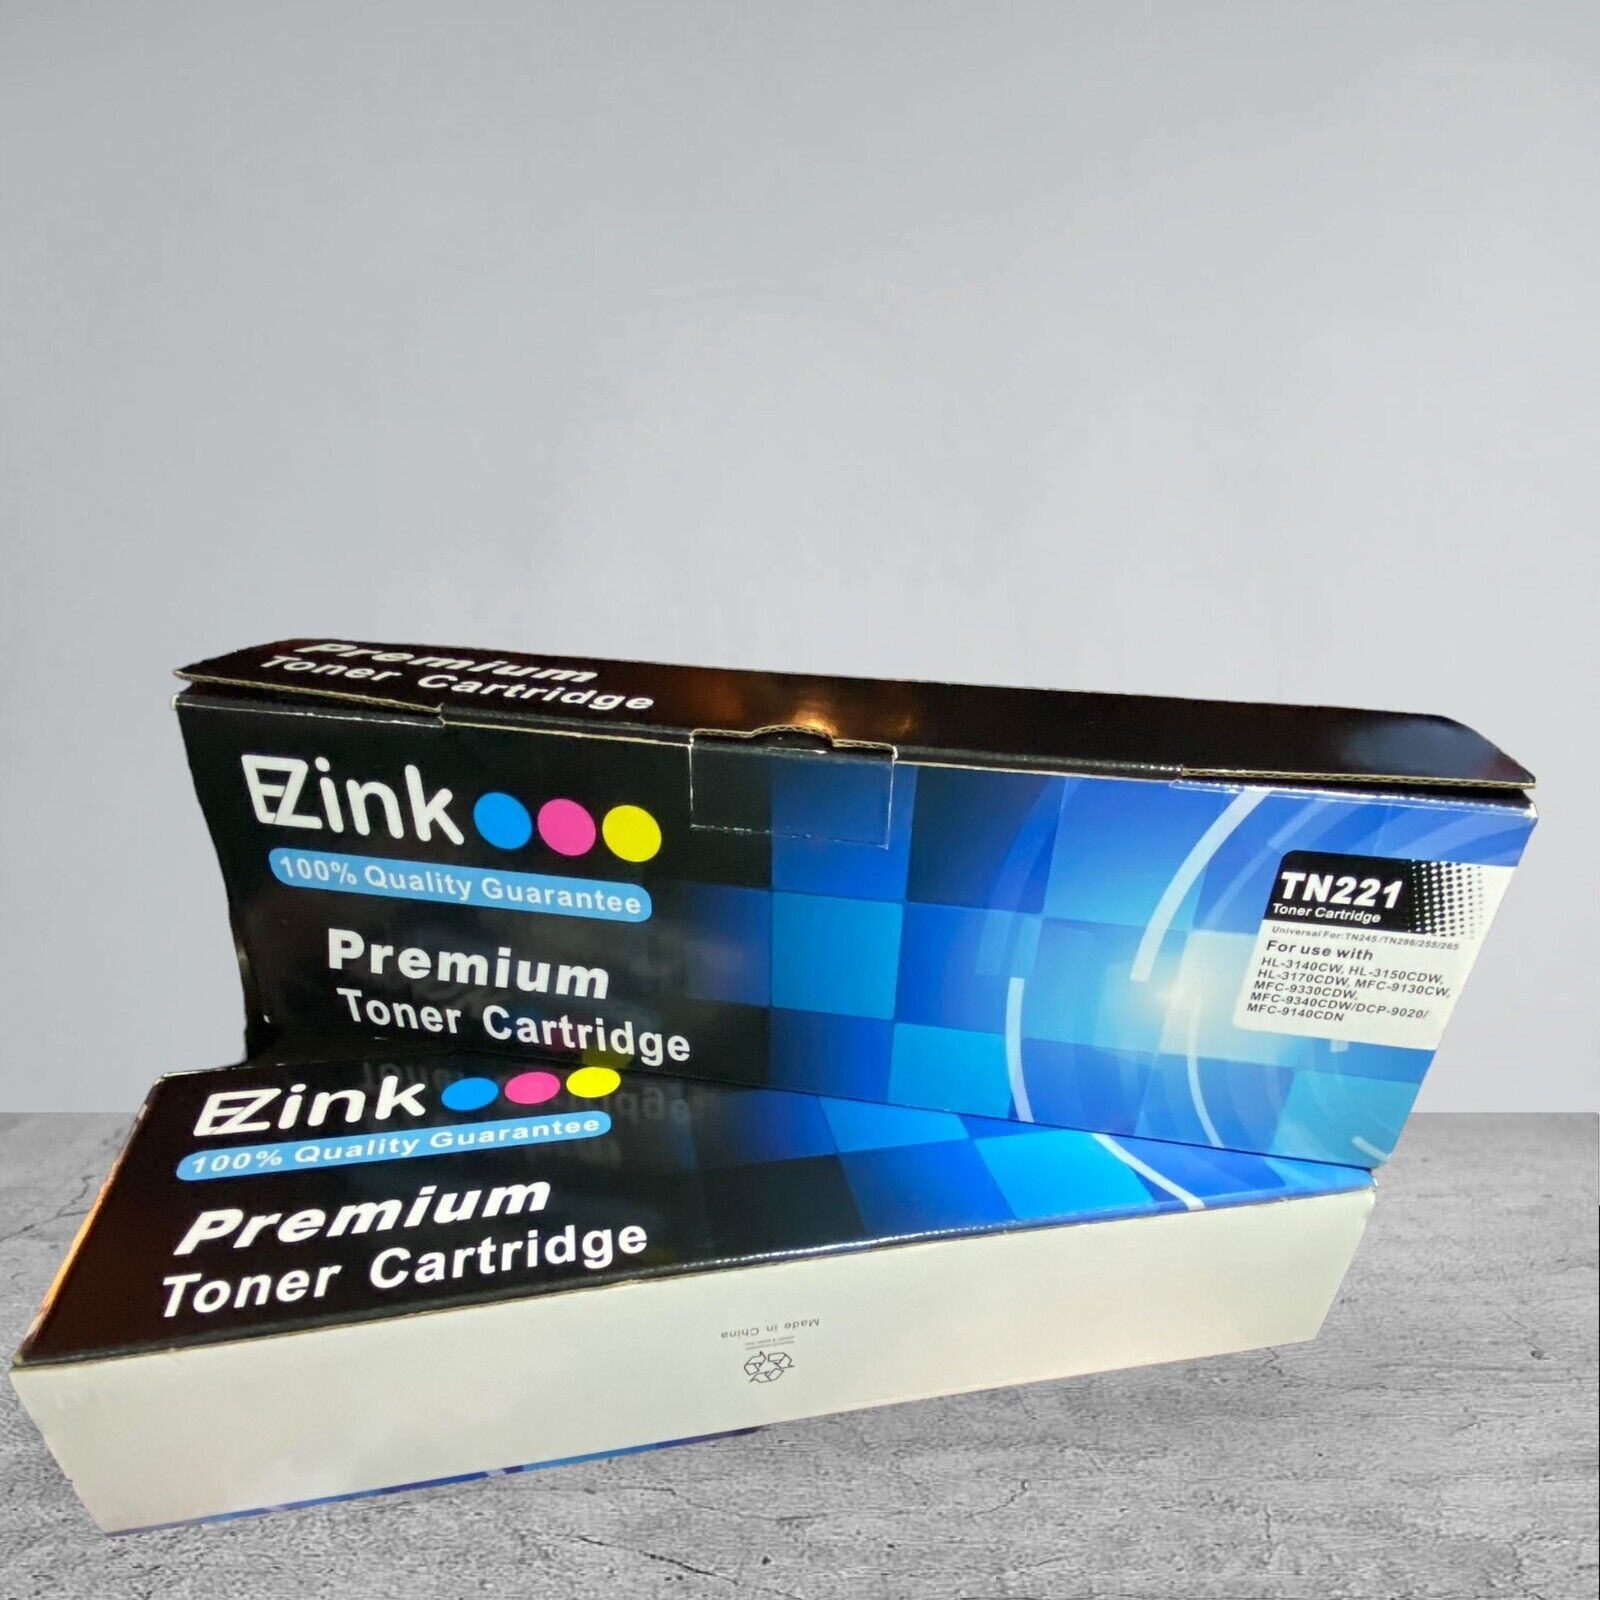 2- EZink TN221 Premium Toner Cartridge Sealed In Box HL-3140 & Other Models ￼